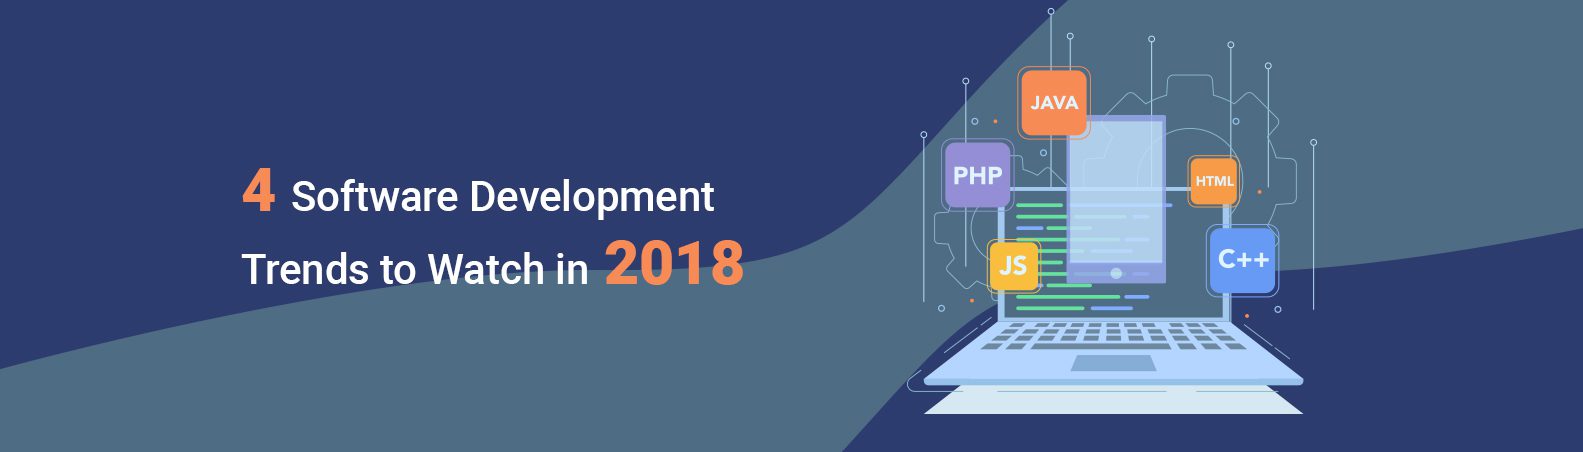 4 Software Development Trends to Watch in 2018